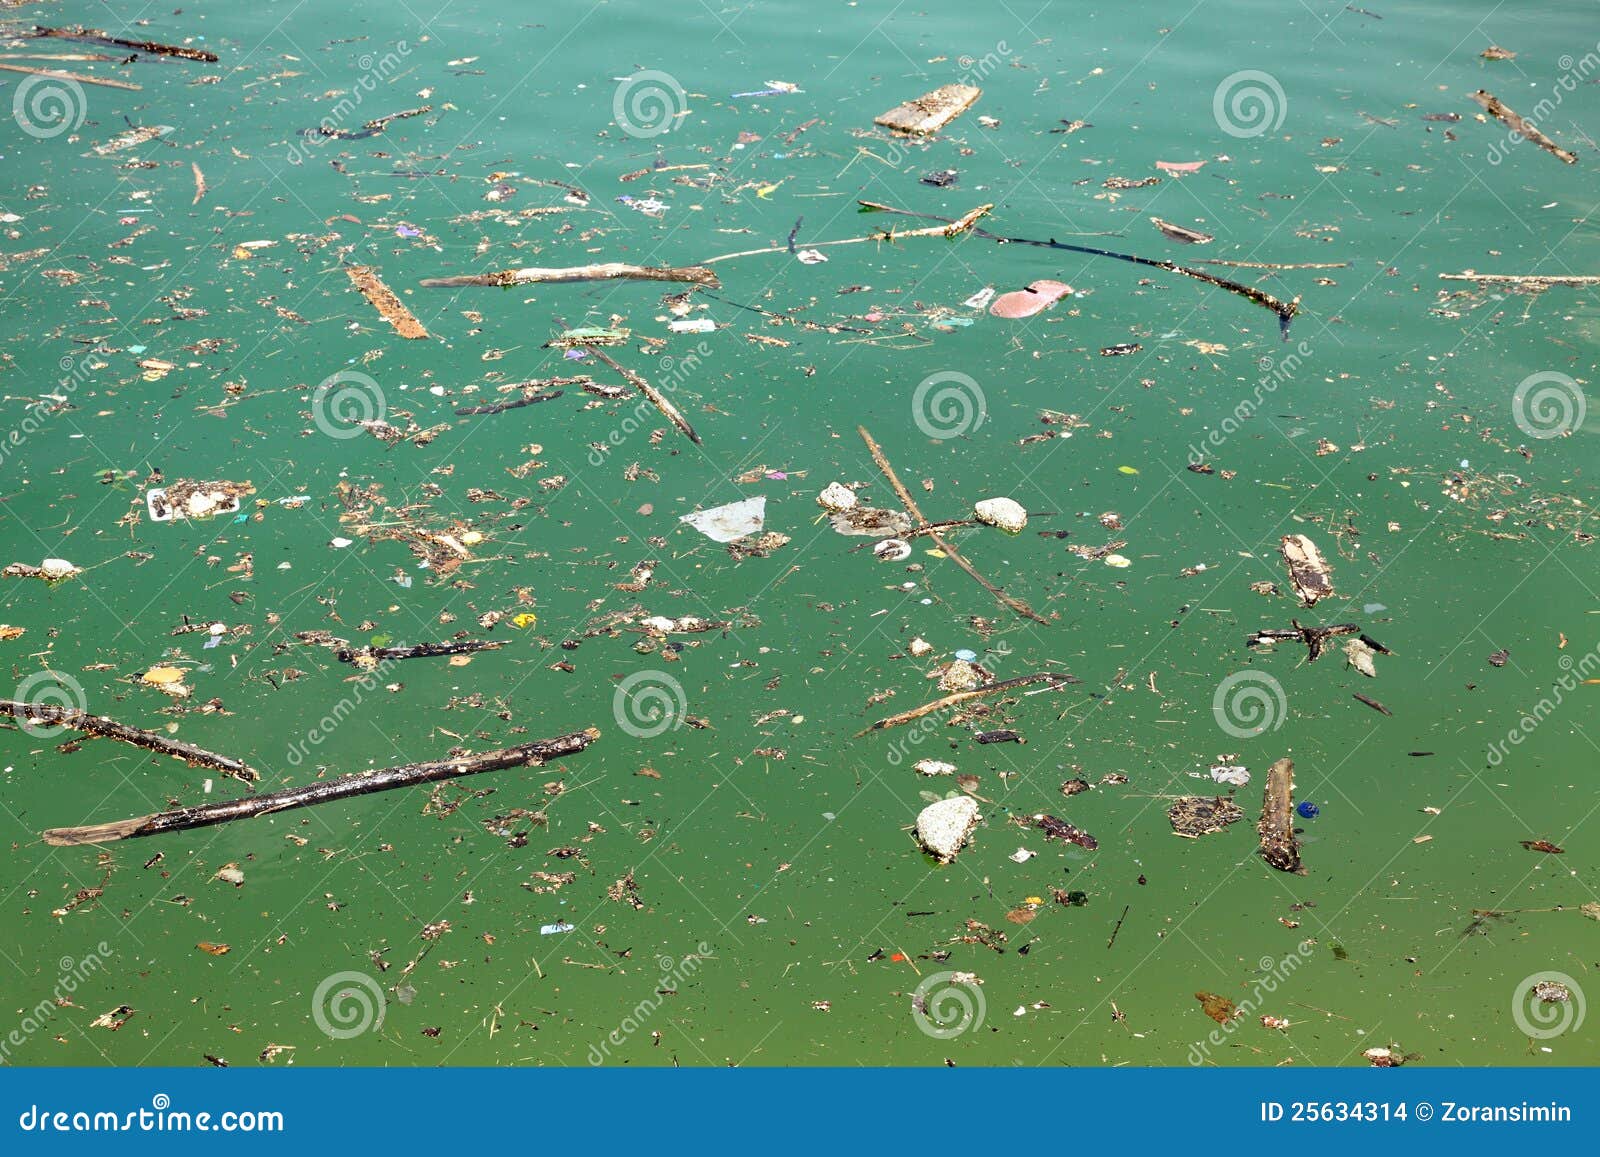 Environmental Damage Stock Images - Image: 25634314